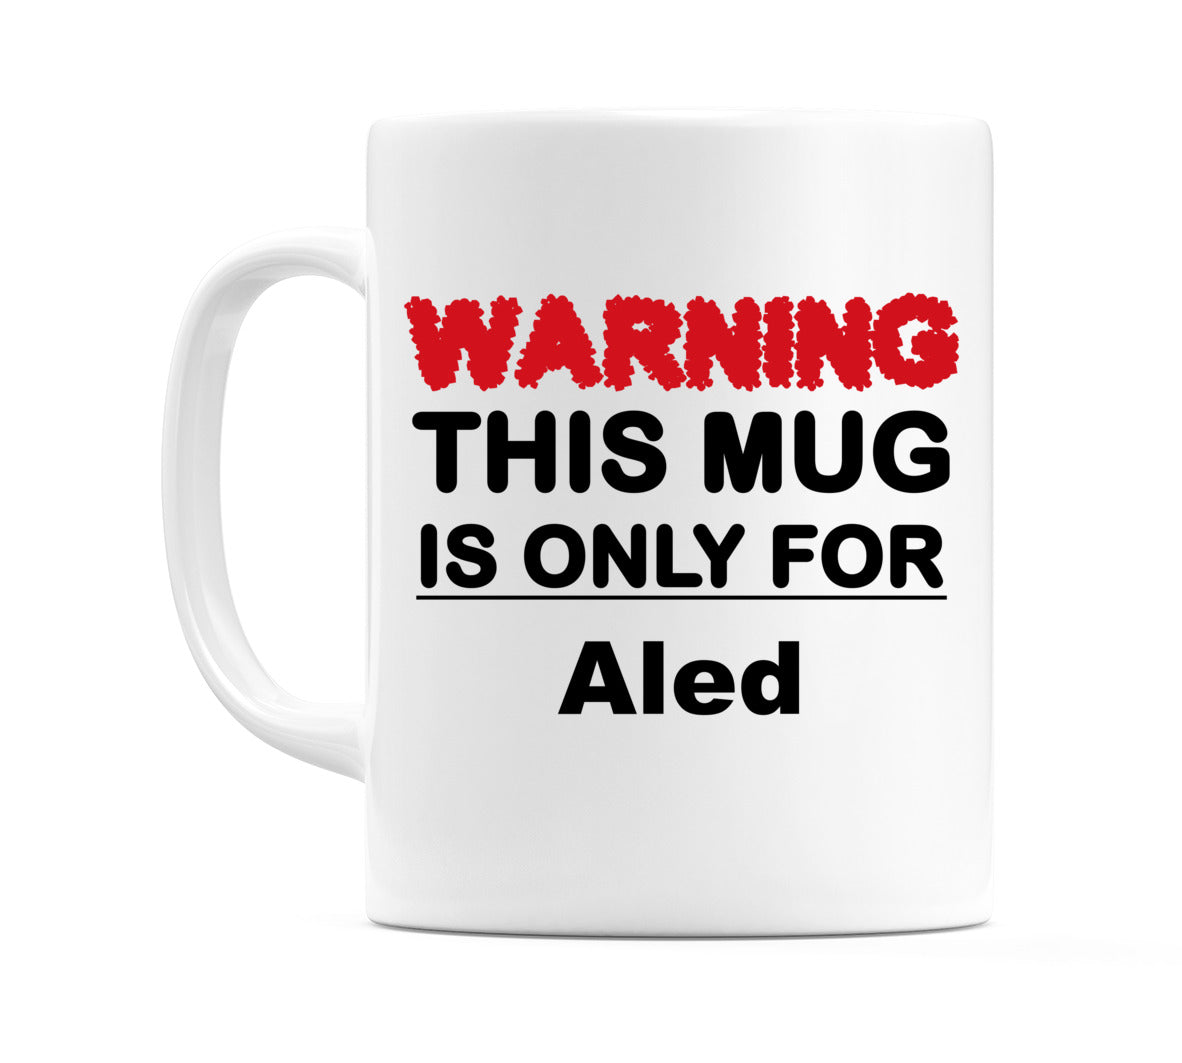 Warning This Mug is ONLY for Aled Mug